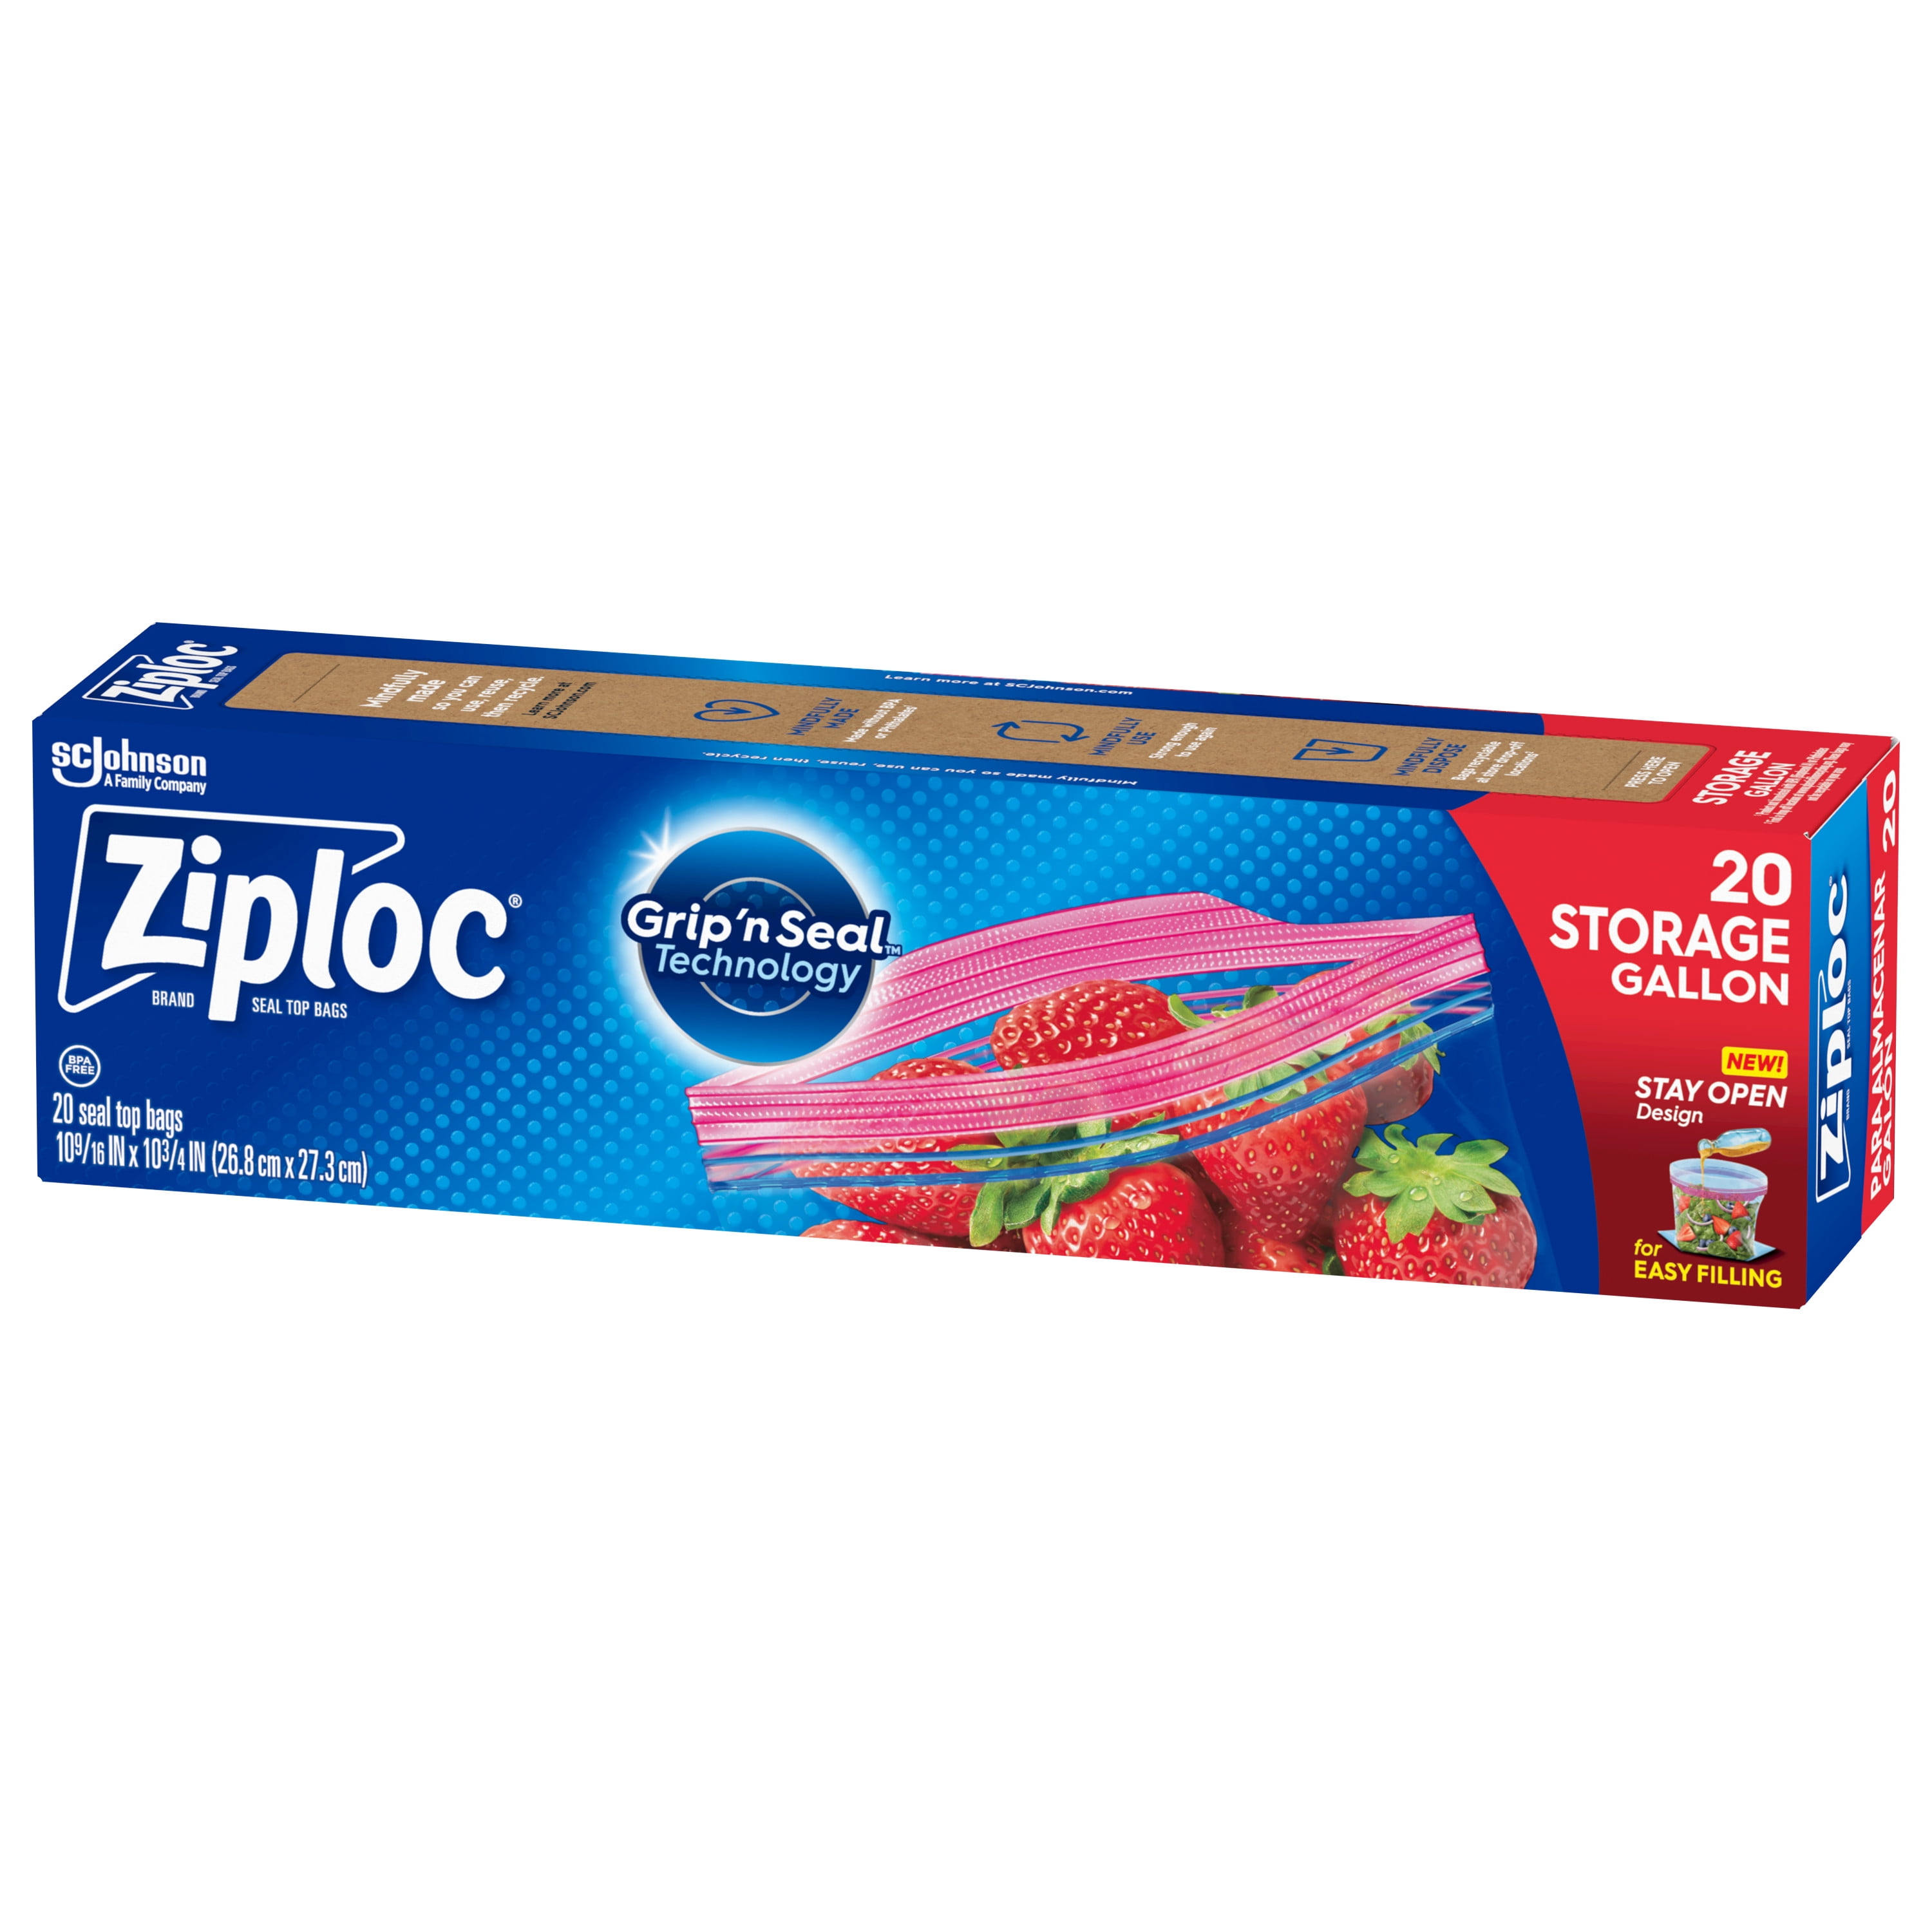 Ziploc Storage Gallon Bag, Stay Open Design, Grip 'n Seal Technology,  Reusable, 60 Count 